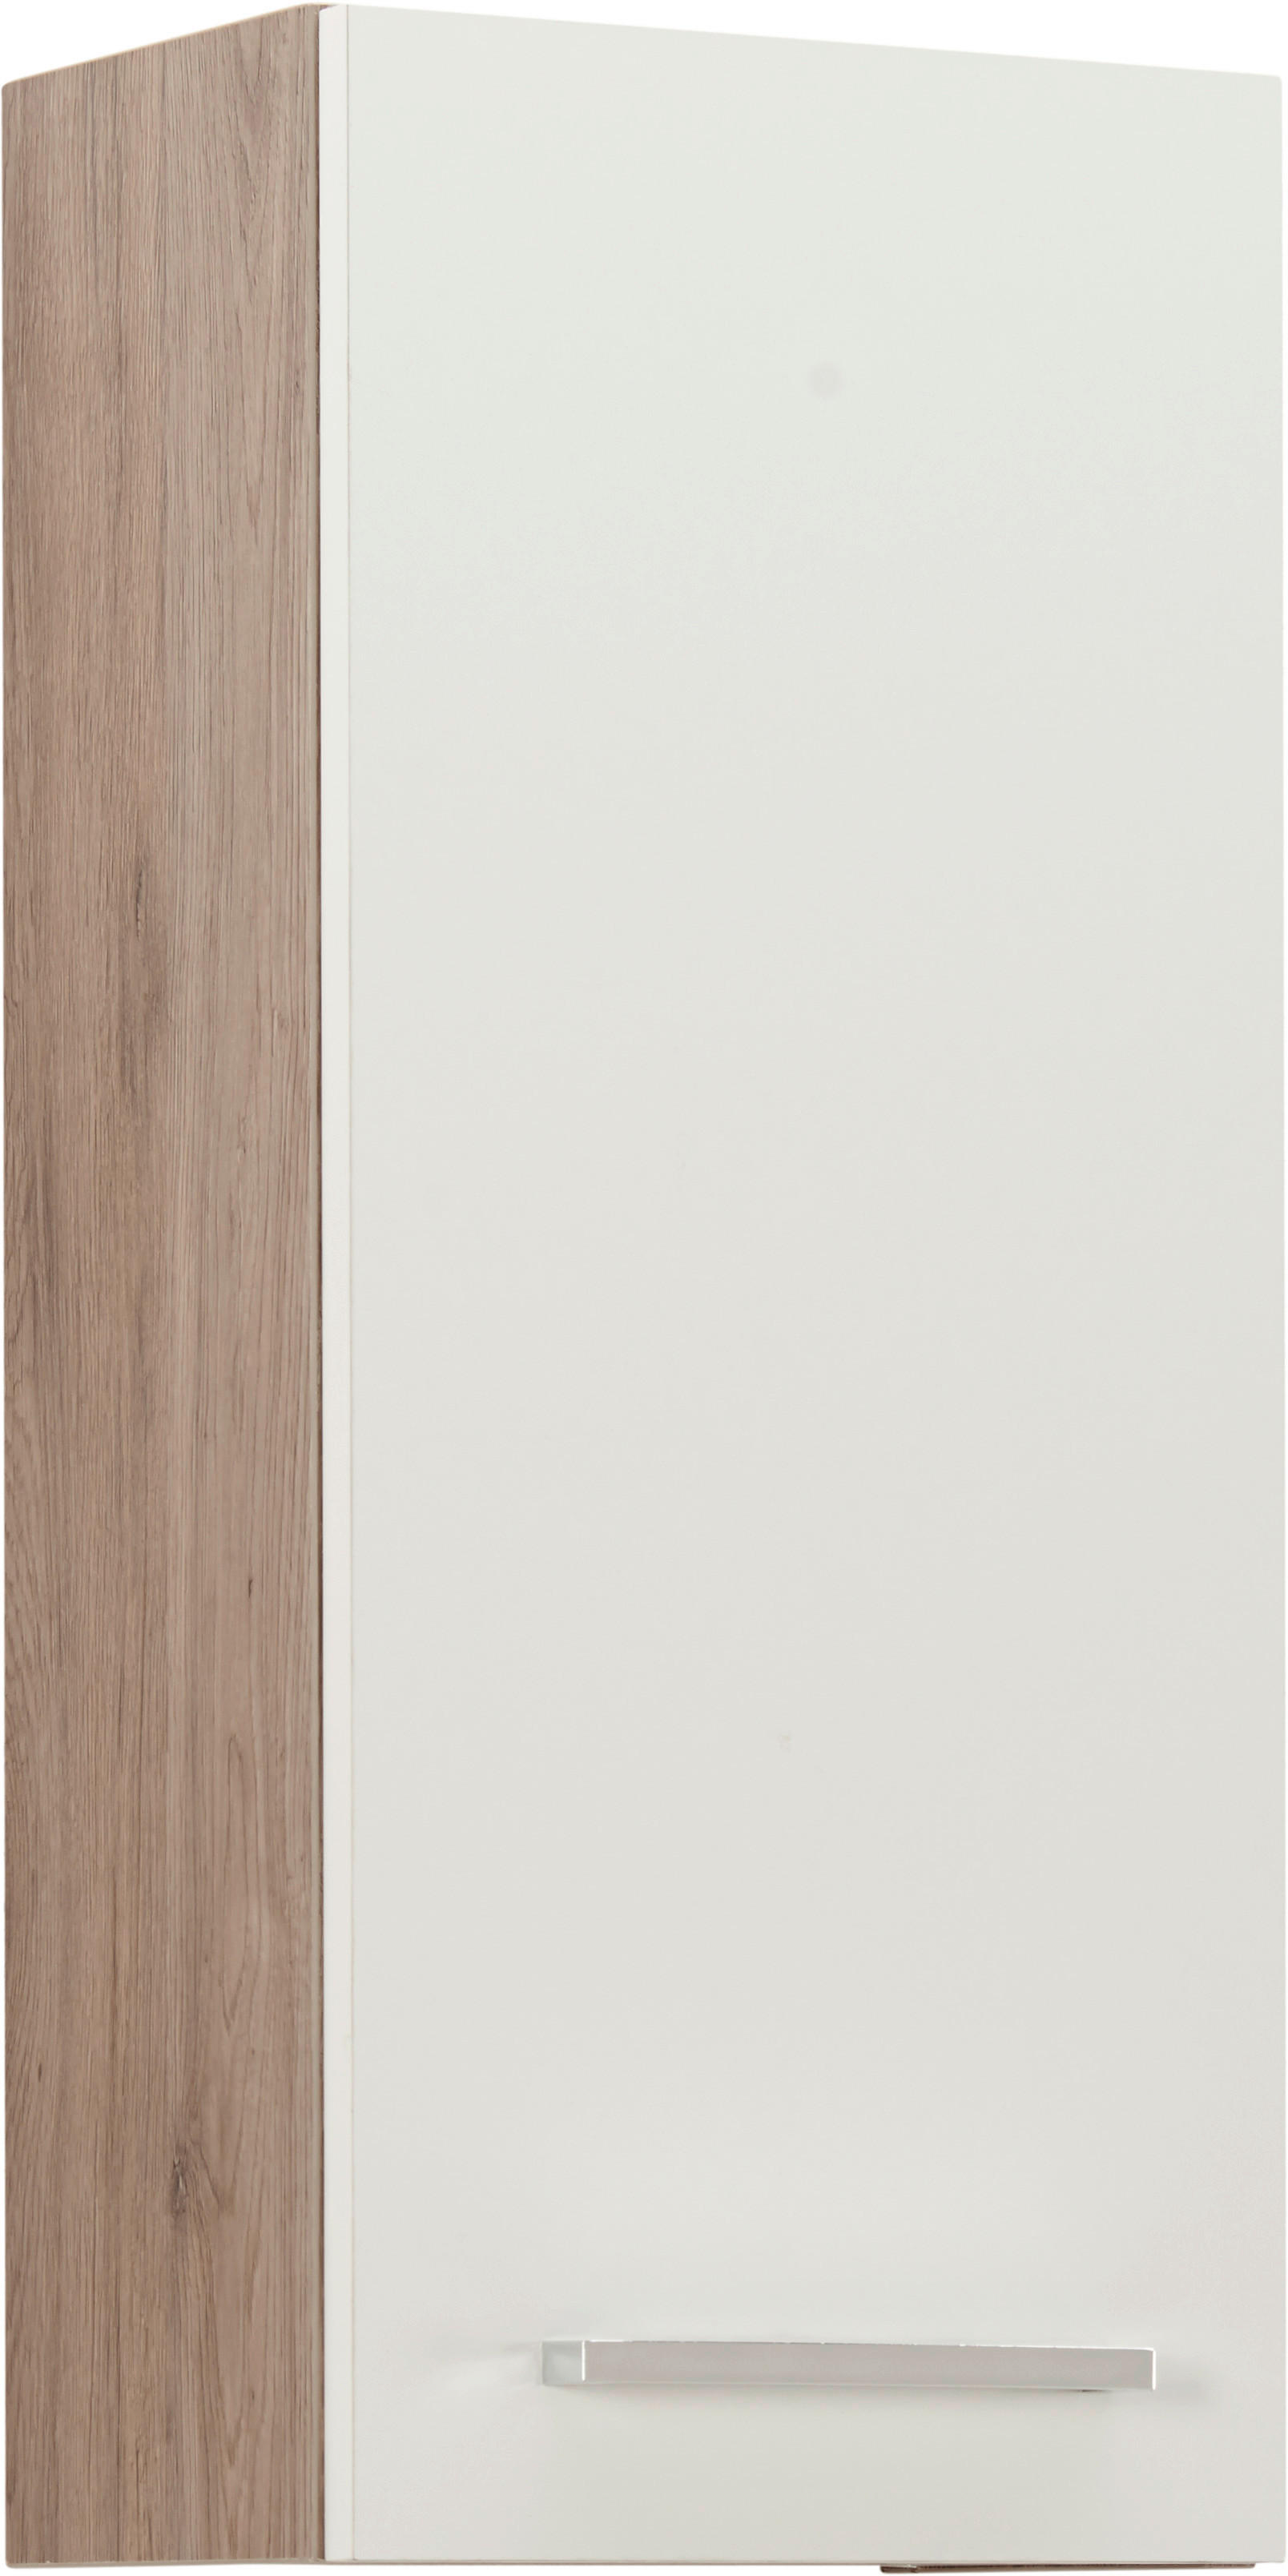 ZÁVĚSNÁ SKŘÍŇKA, barvy dubu, 30/70/20 cm - bílá/barvy dubu, Design, kov/kompozitní dřevo (30/70/20cm) - Xora